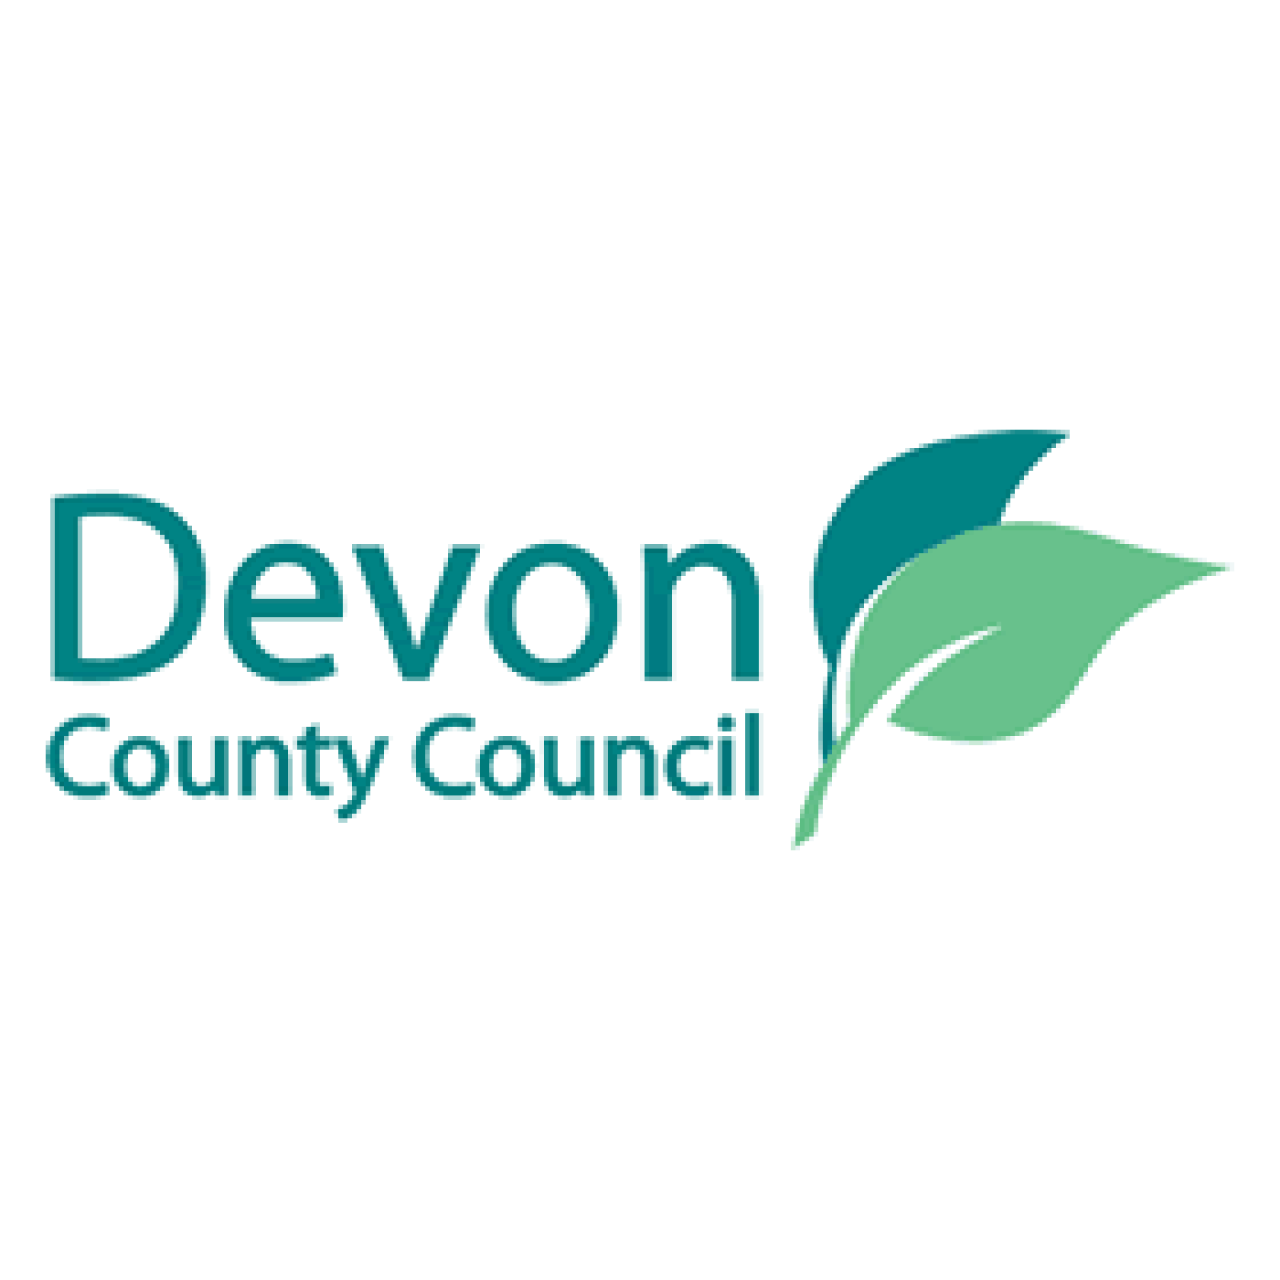 Devon County Council Logo.